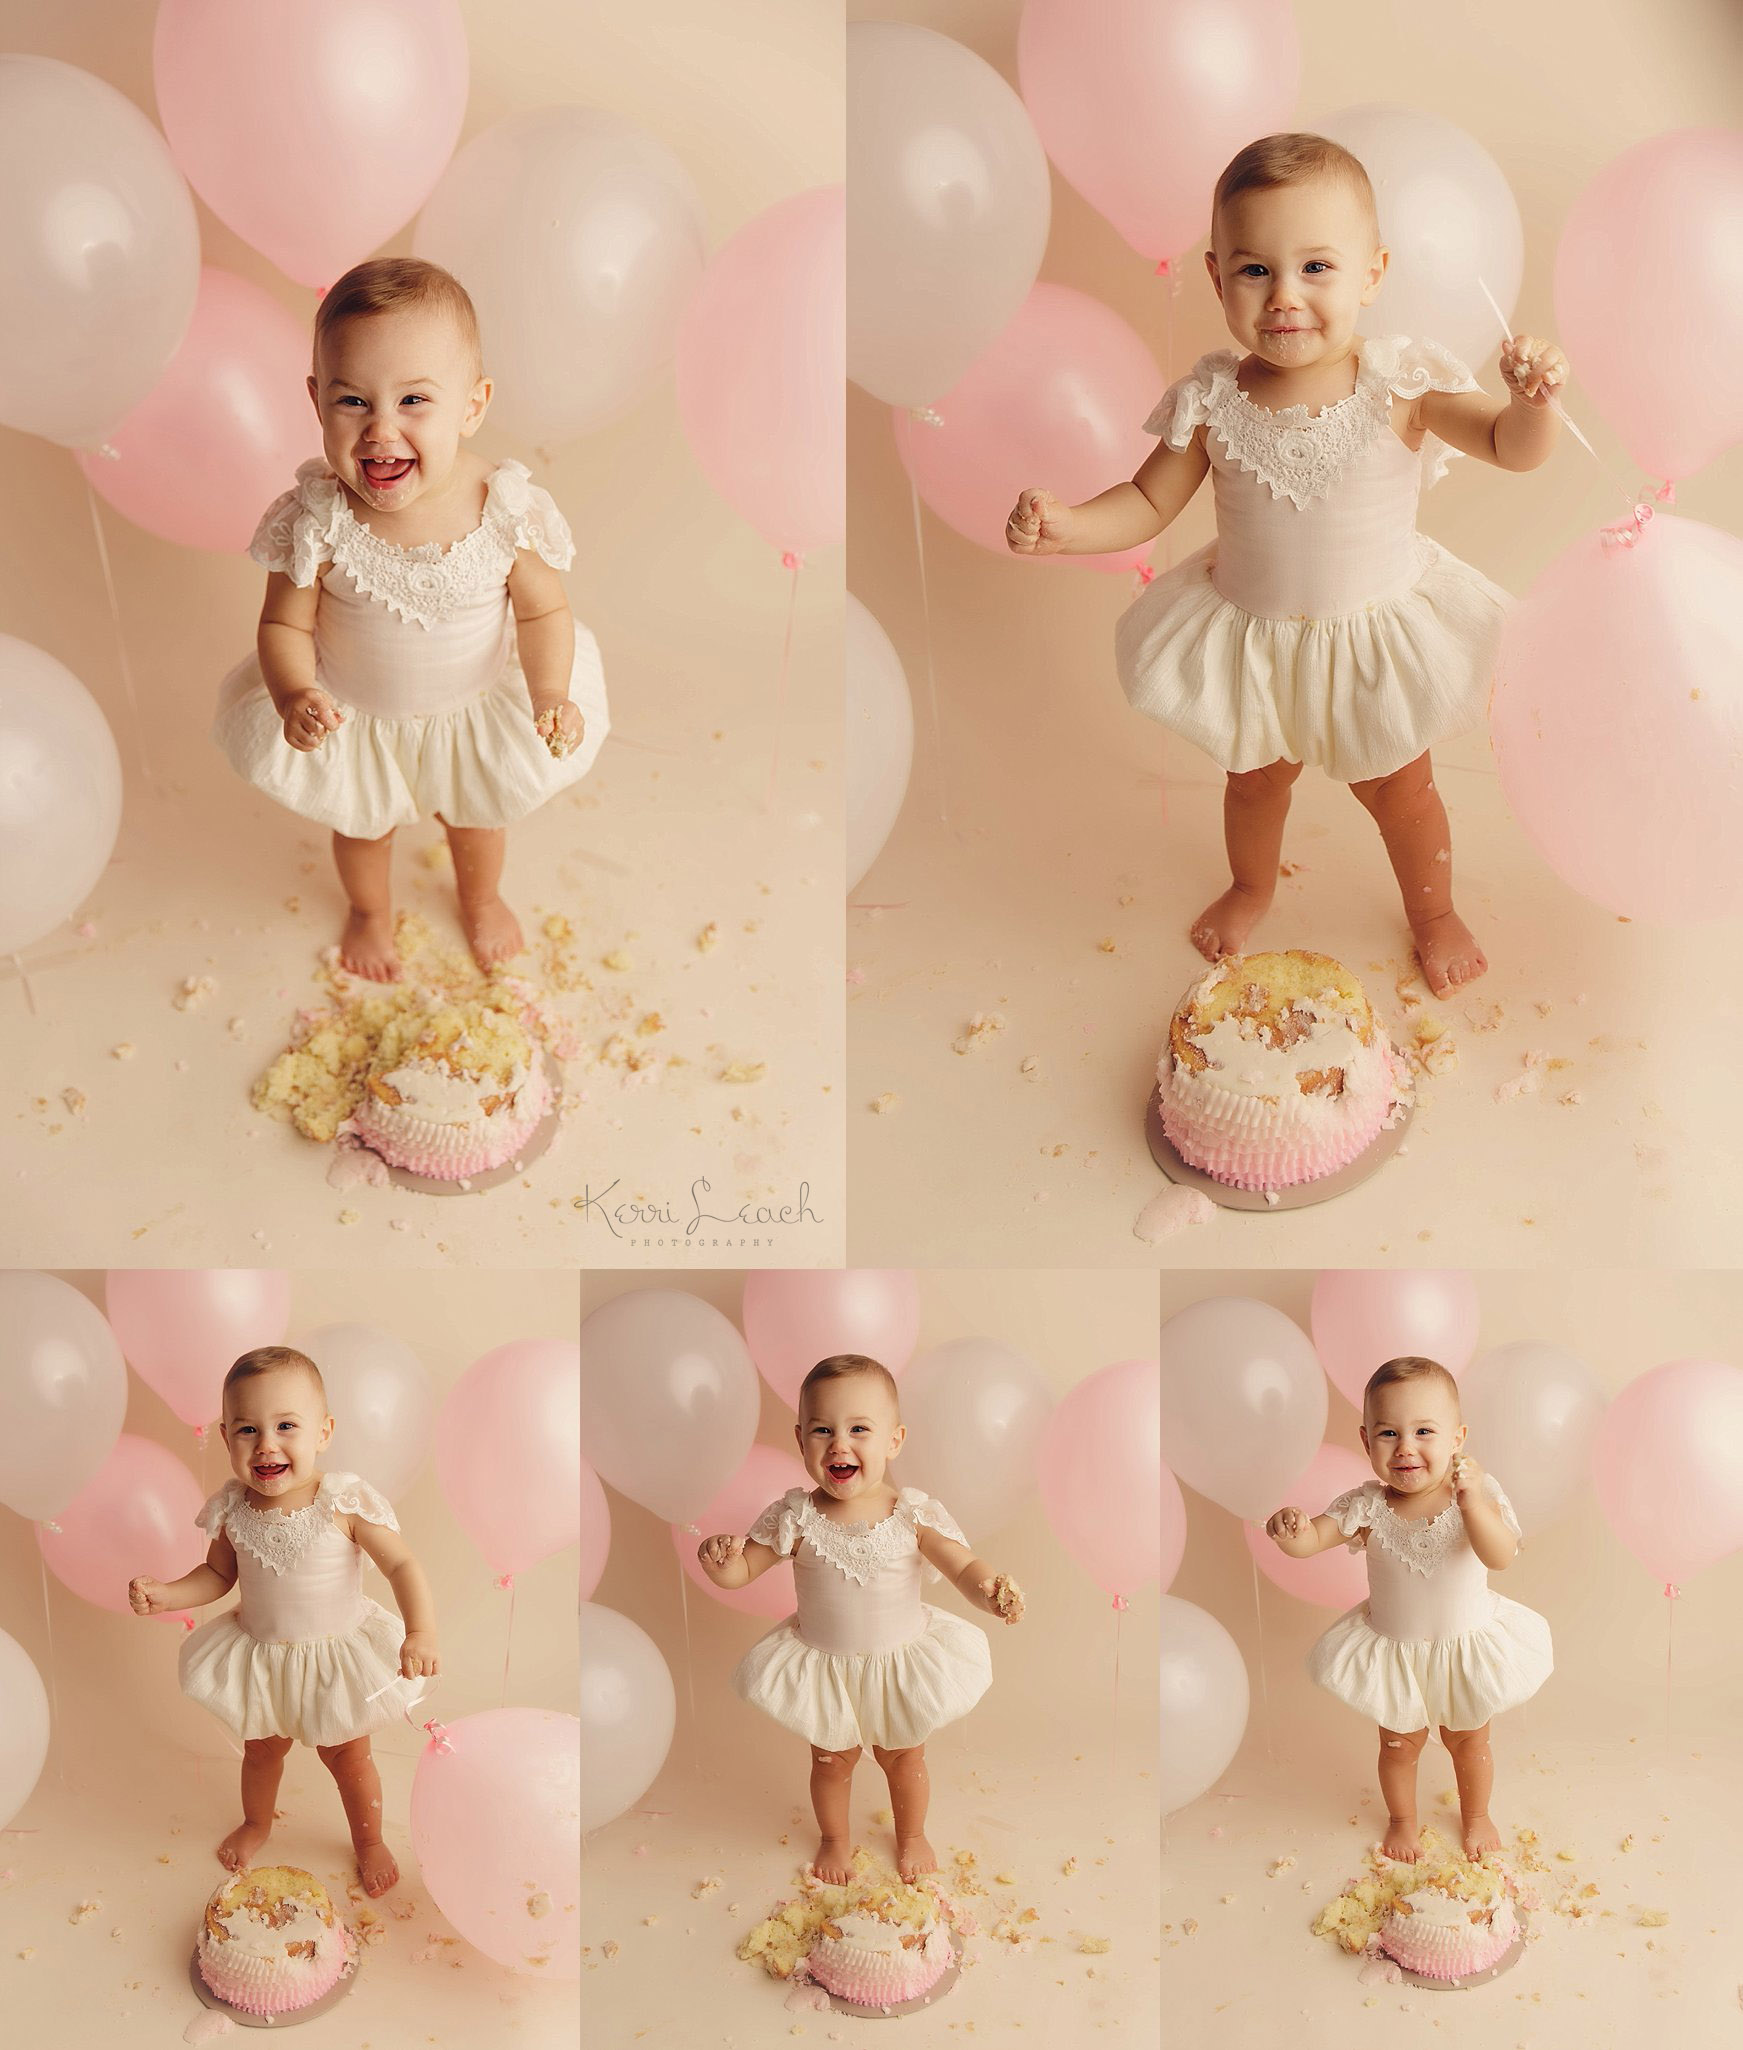 Kerri Leach Photography-Cake smash session-1 year session-Evansville, In photographer-baby photographer Evansville